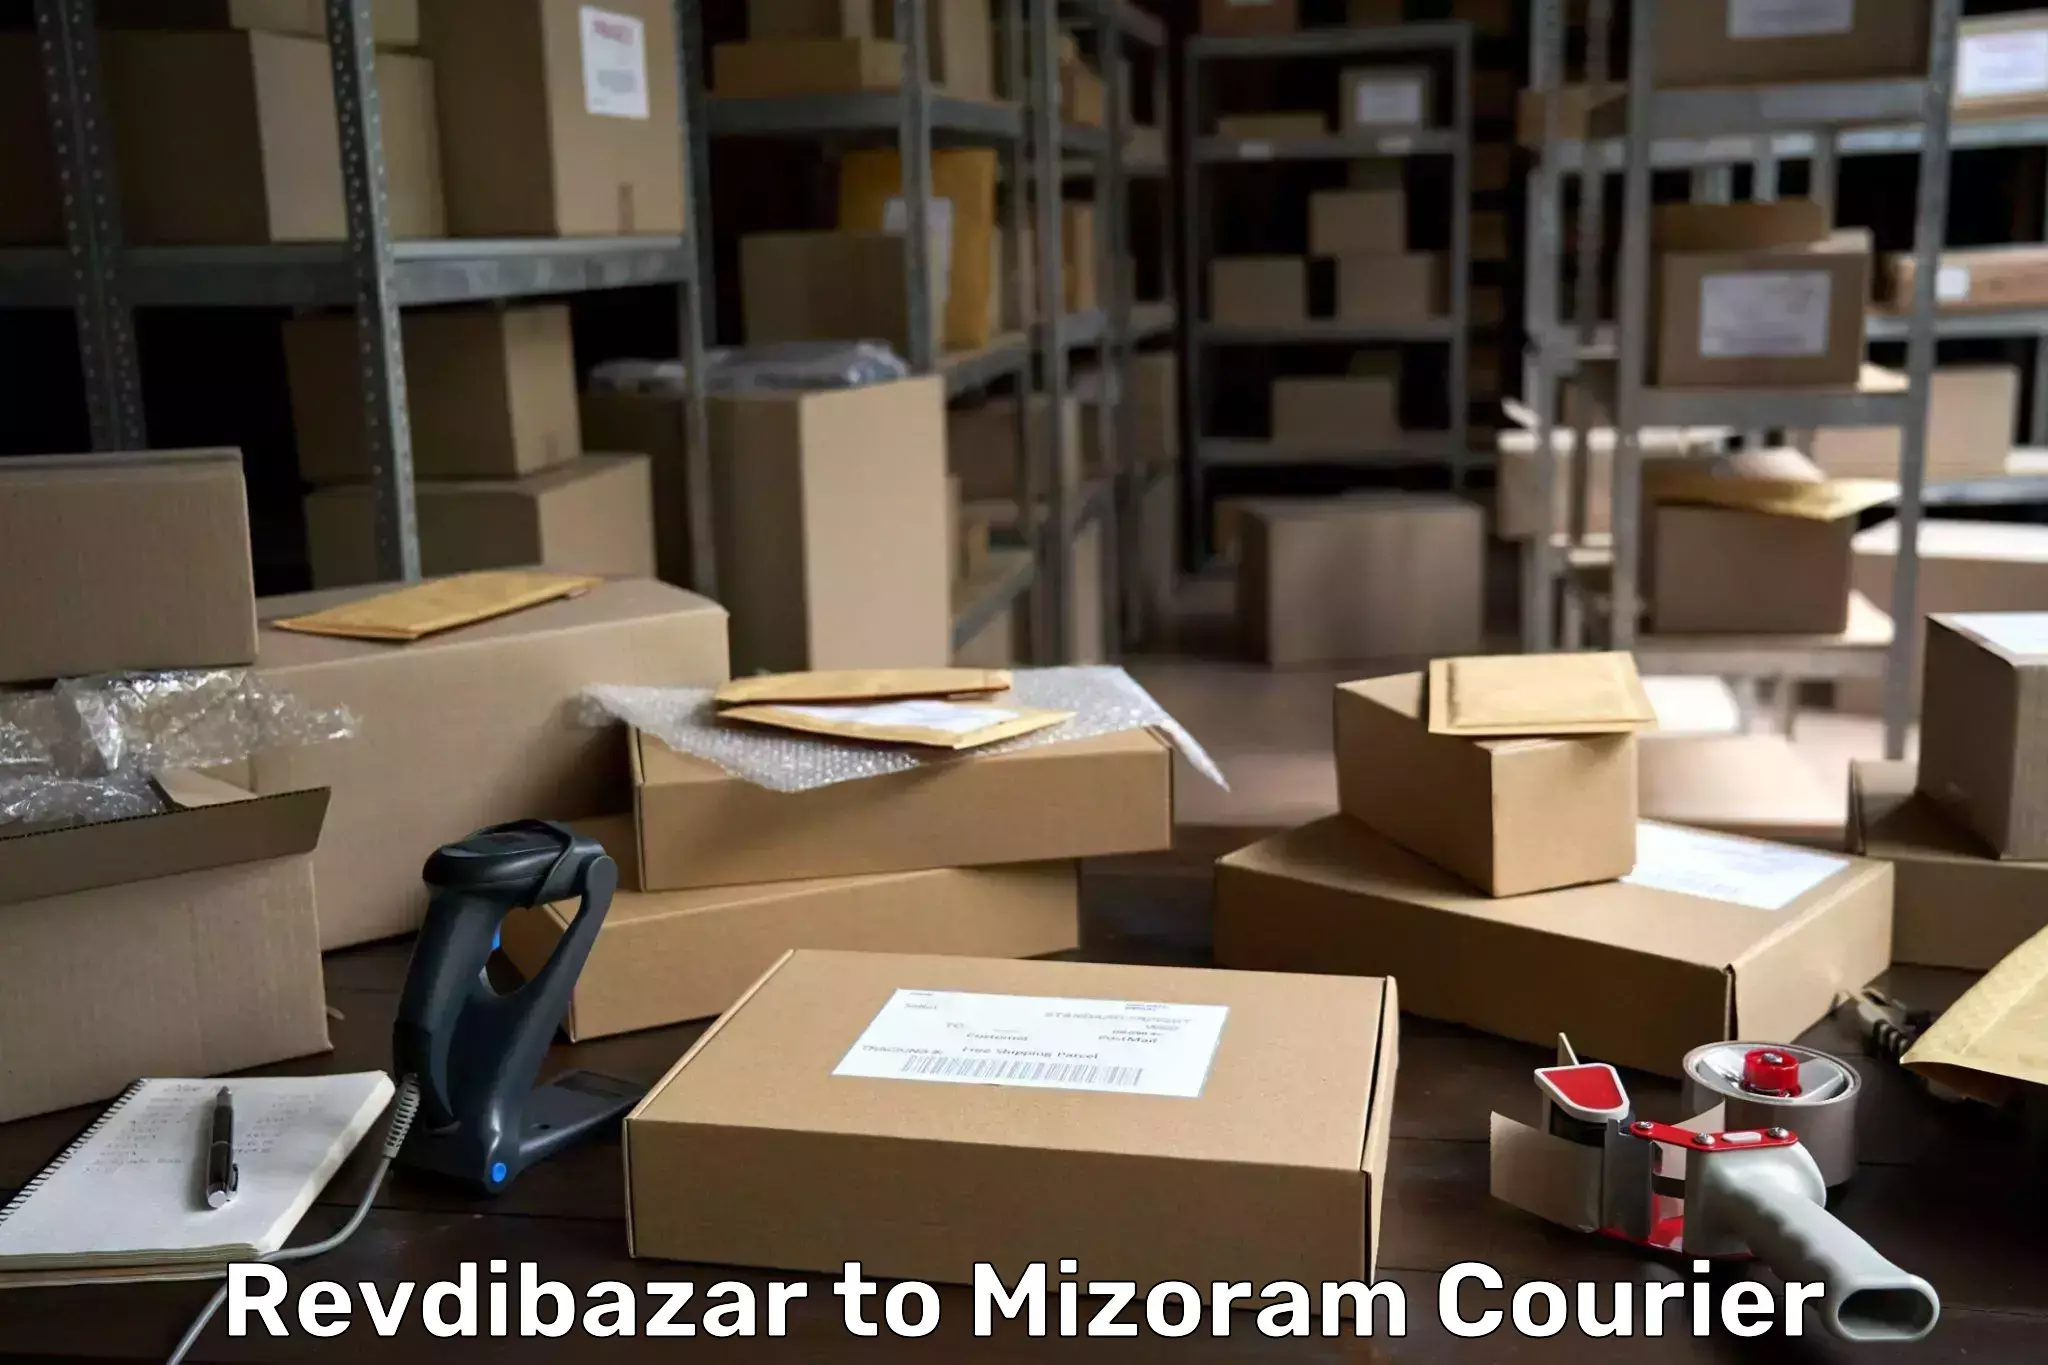 Multi-service courier options Revdibazar to Mizoram